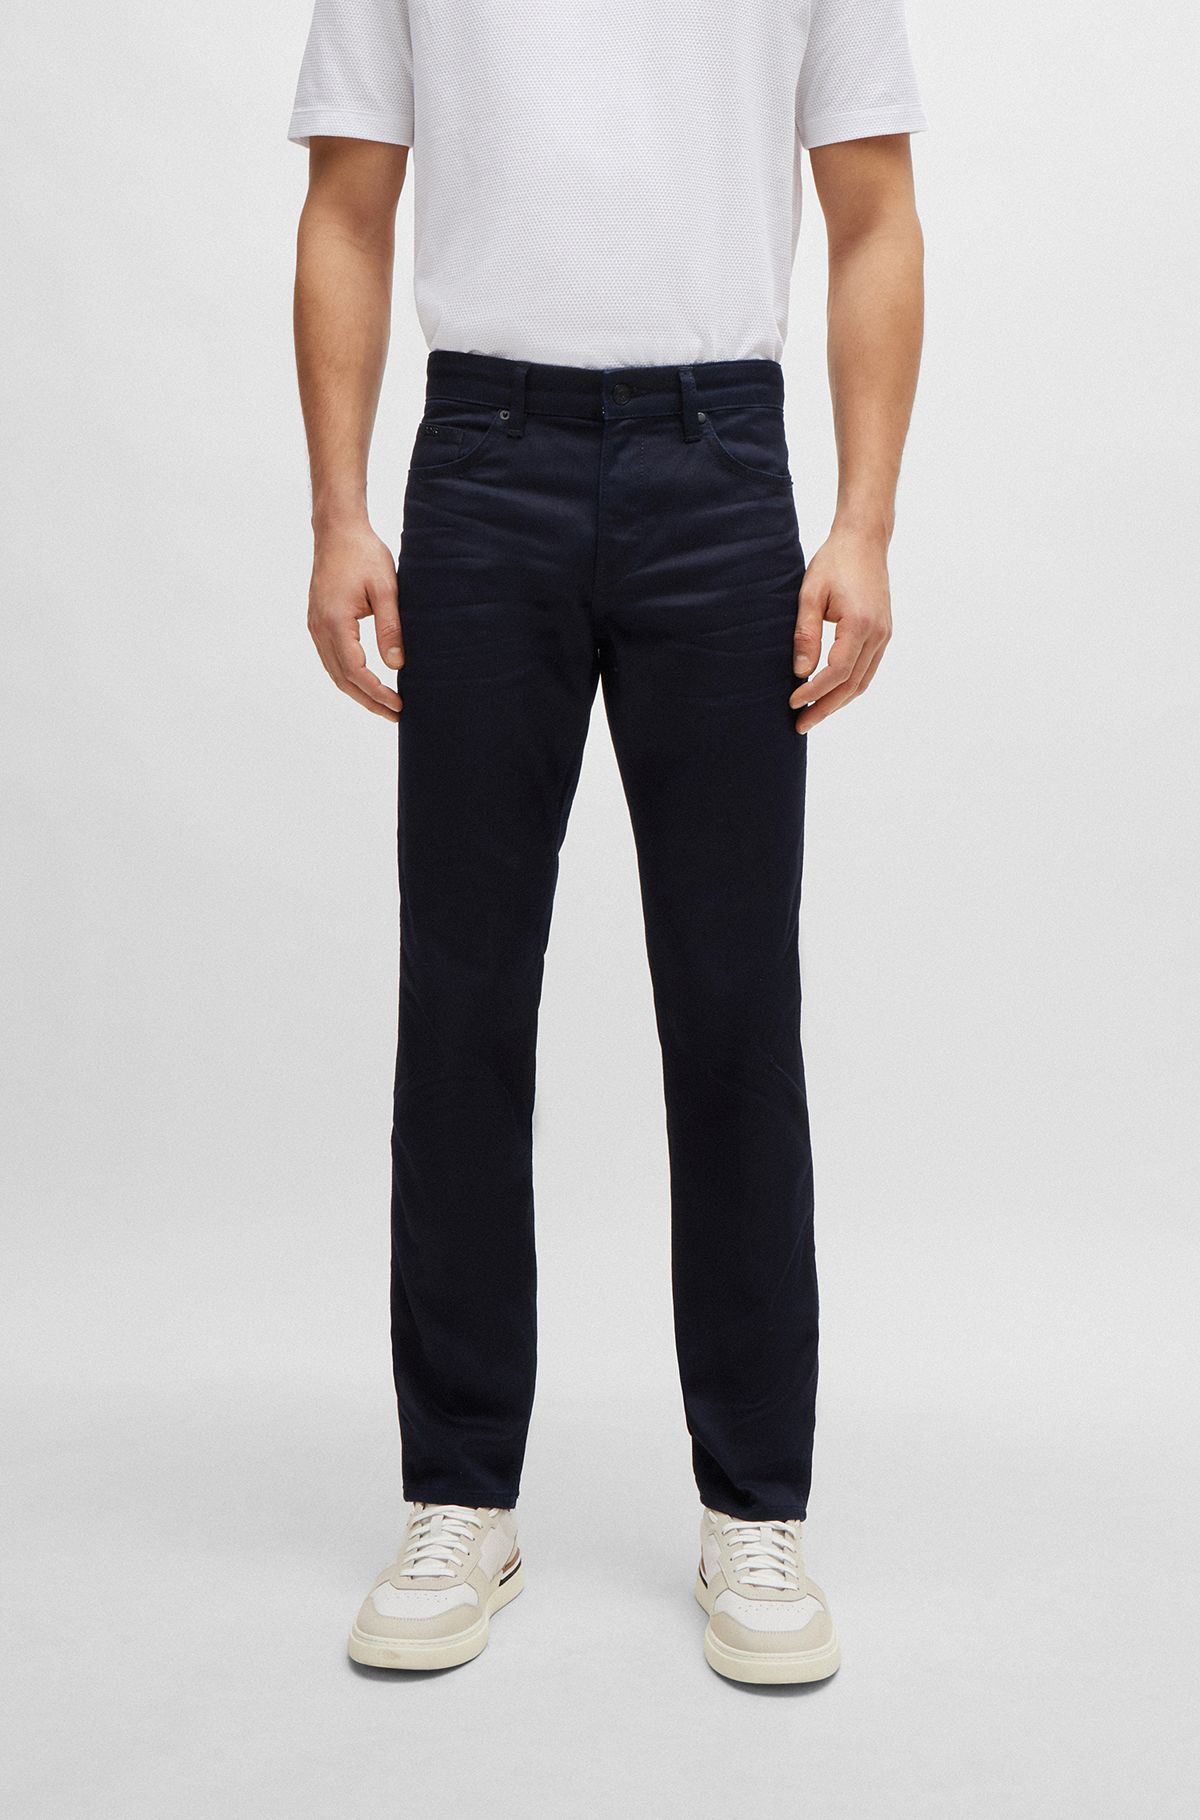 BOSS - Slim-fit jeans in blue-black comfort-stretch denim